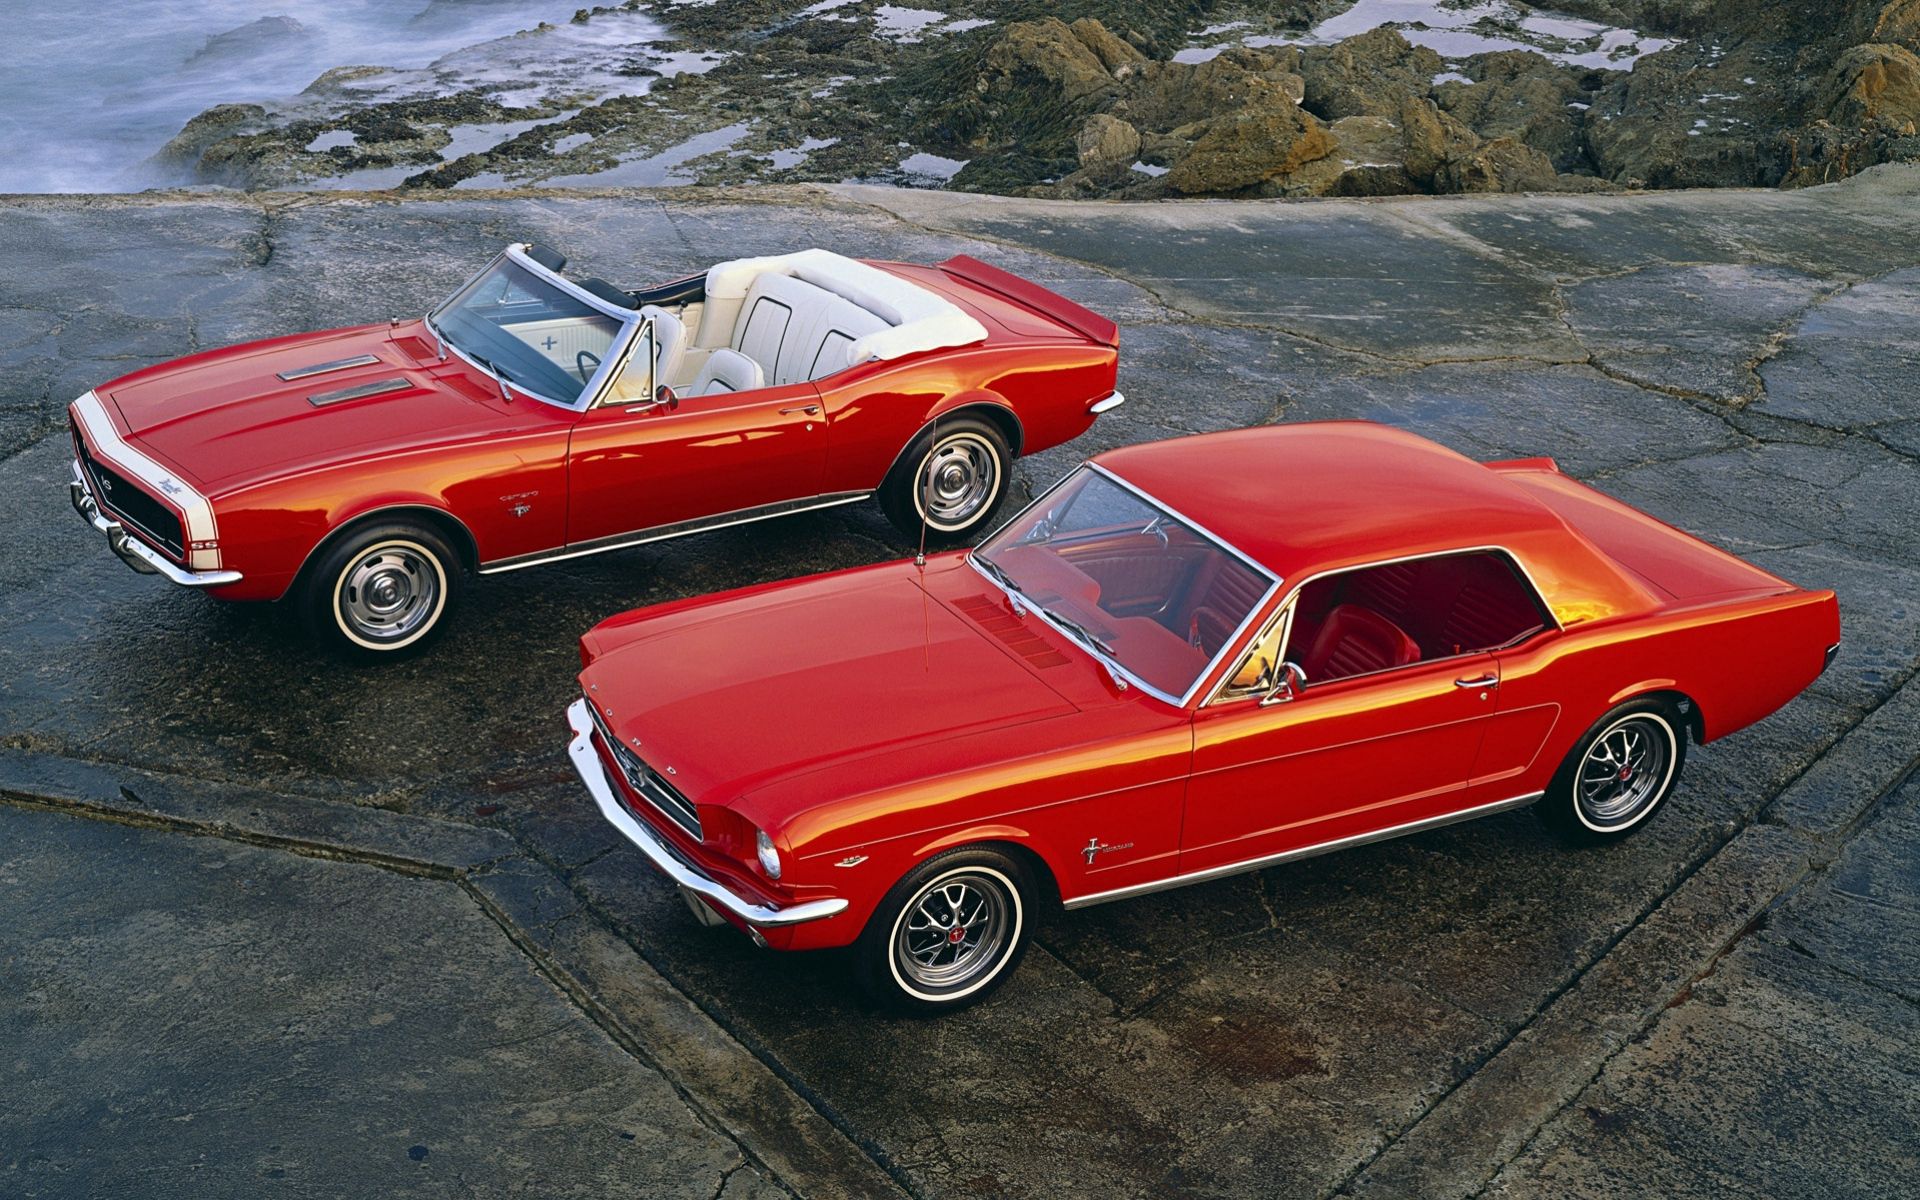 67051 Bild herunterladen cars, 1967, ford mustang, cabrio, muskelautos, muscle cars, 1964, hardtop-coupé, chevrolet camaro ss - Hintergrundbilder und Bildschirmschoner kostenlos